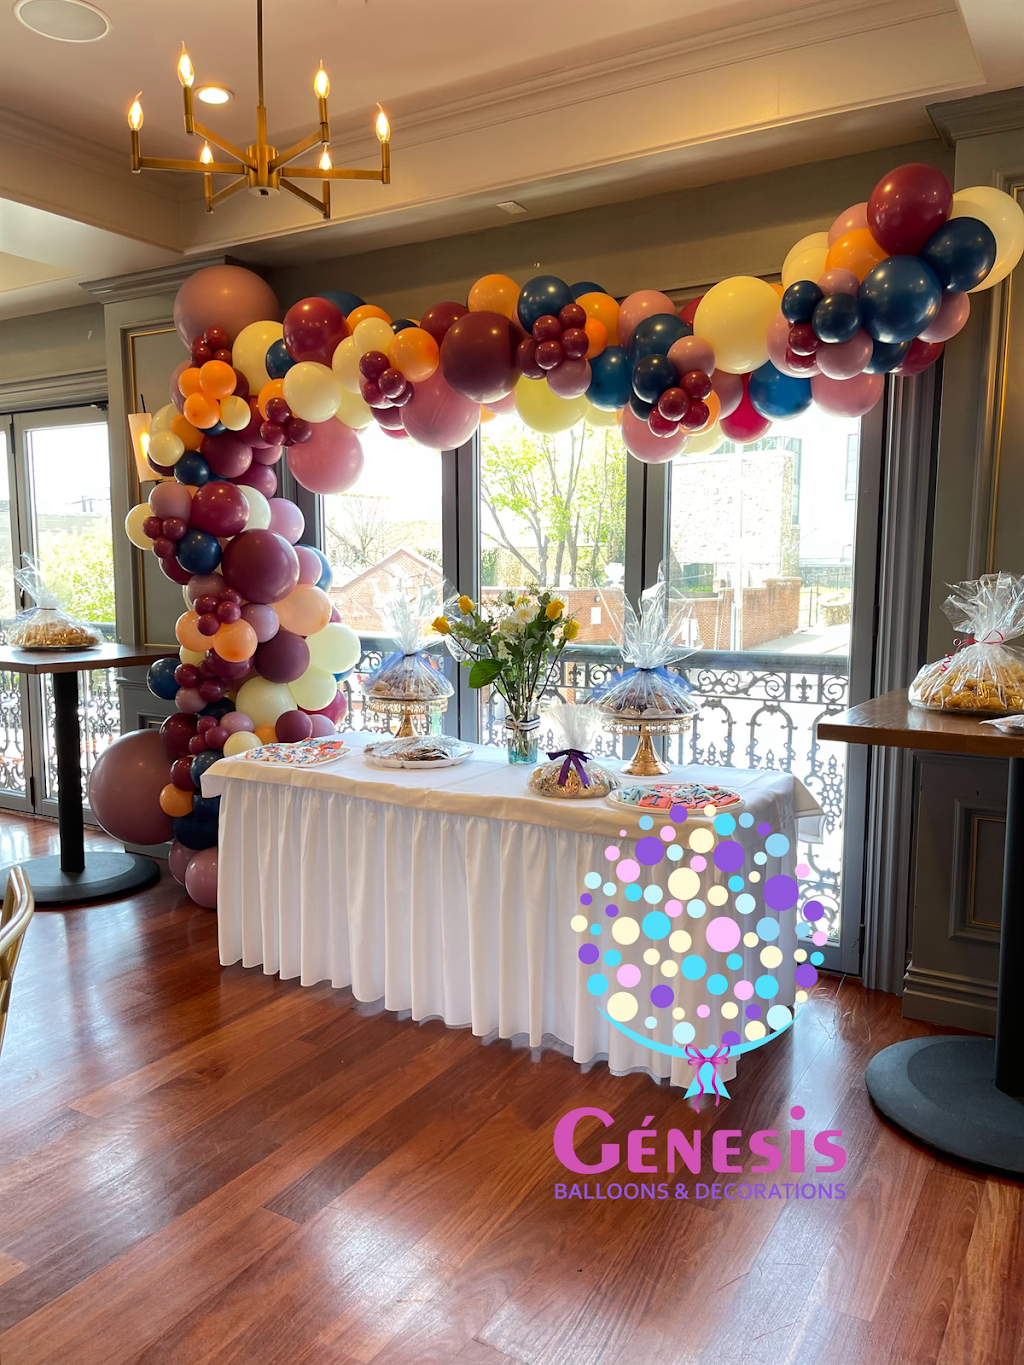 Genesis Balloons & Decorations | 7 Charles St, White Plains, NY 10606 | Phone: (914) 356-6377